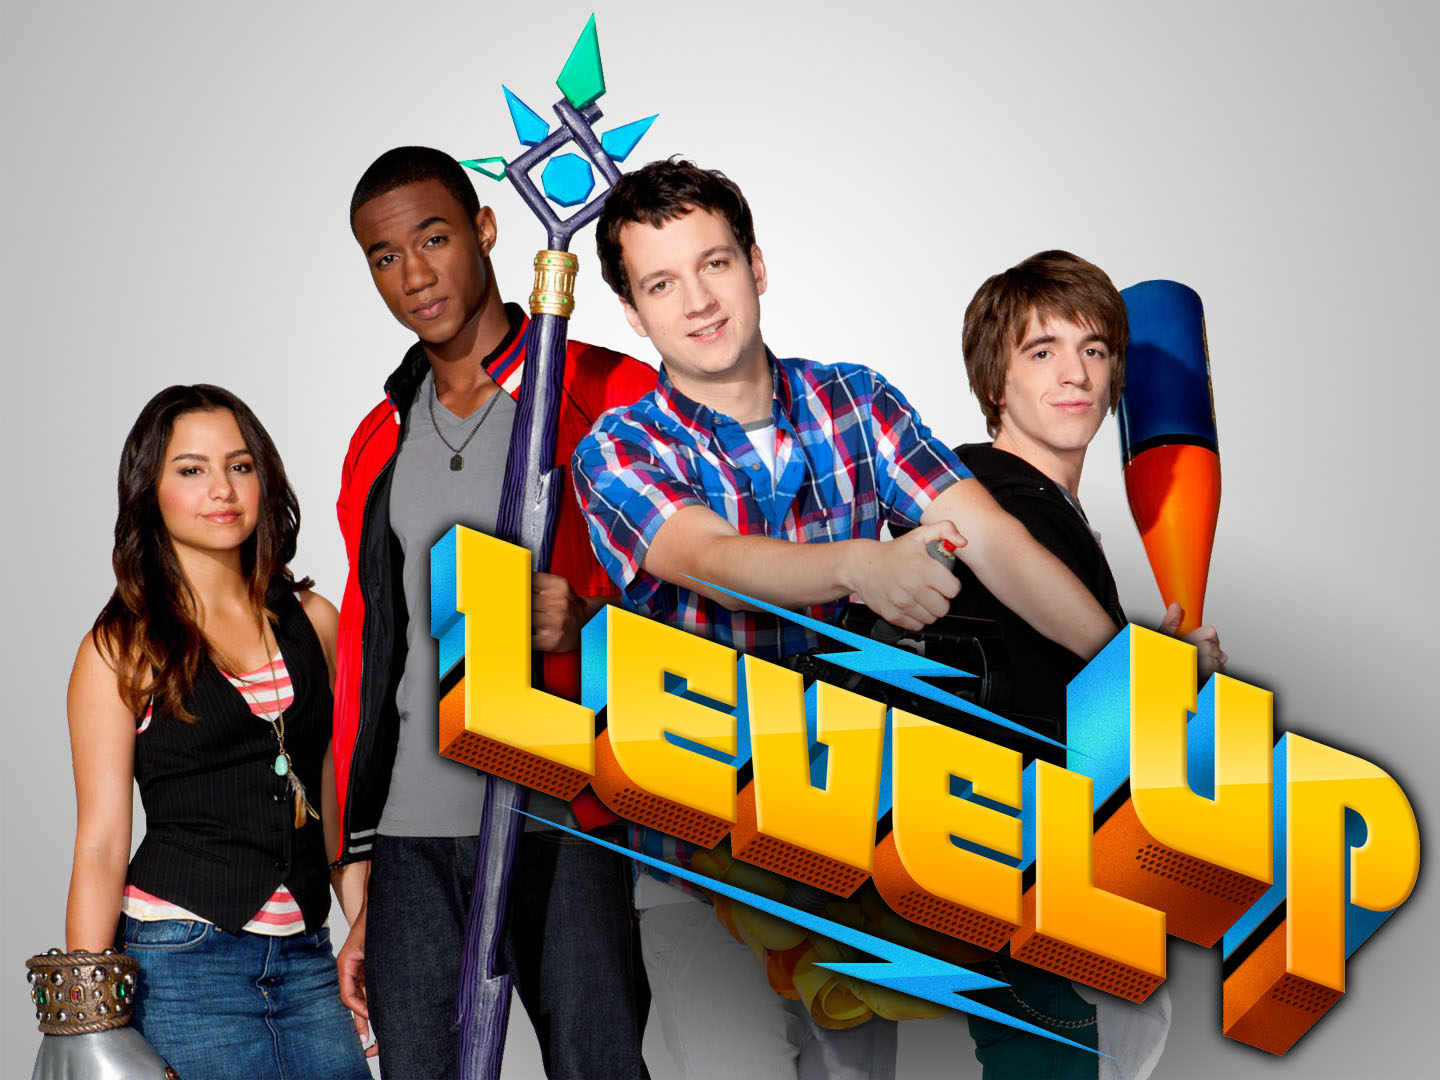 Level Up (Cartoon Network)